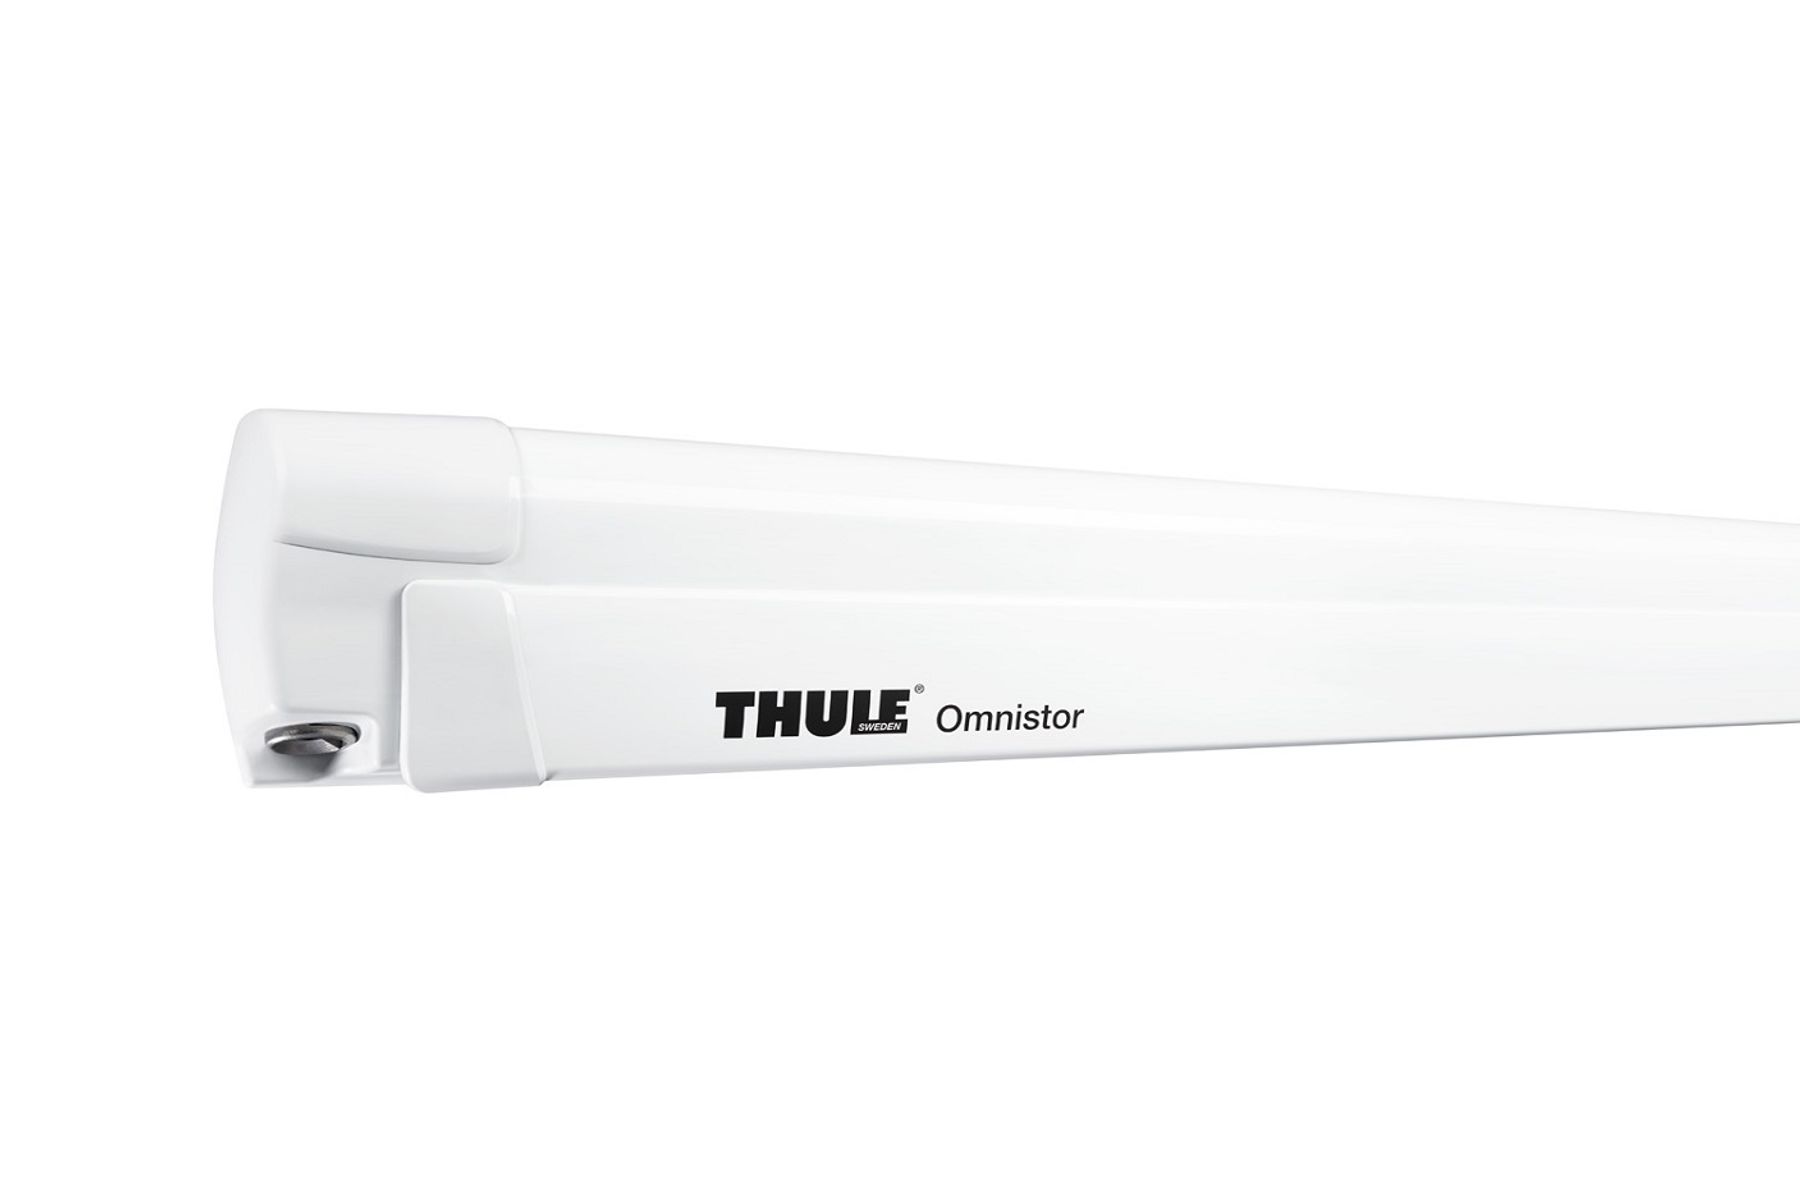 Thule omnistor 8000 white awning caravan motorhome wall mounted